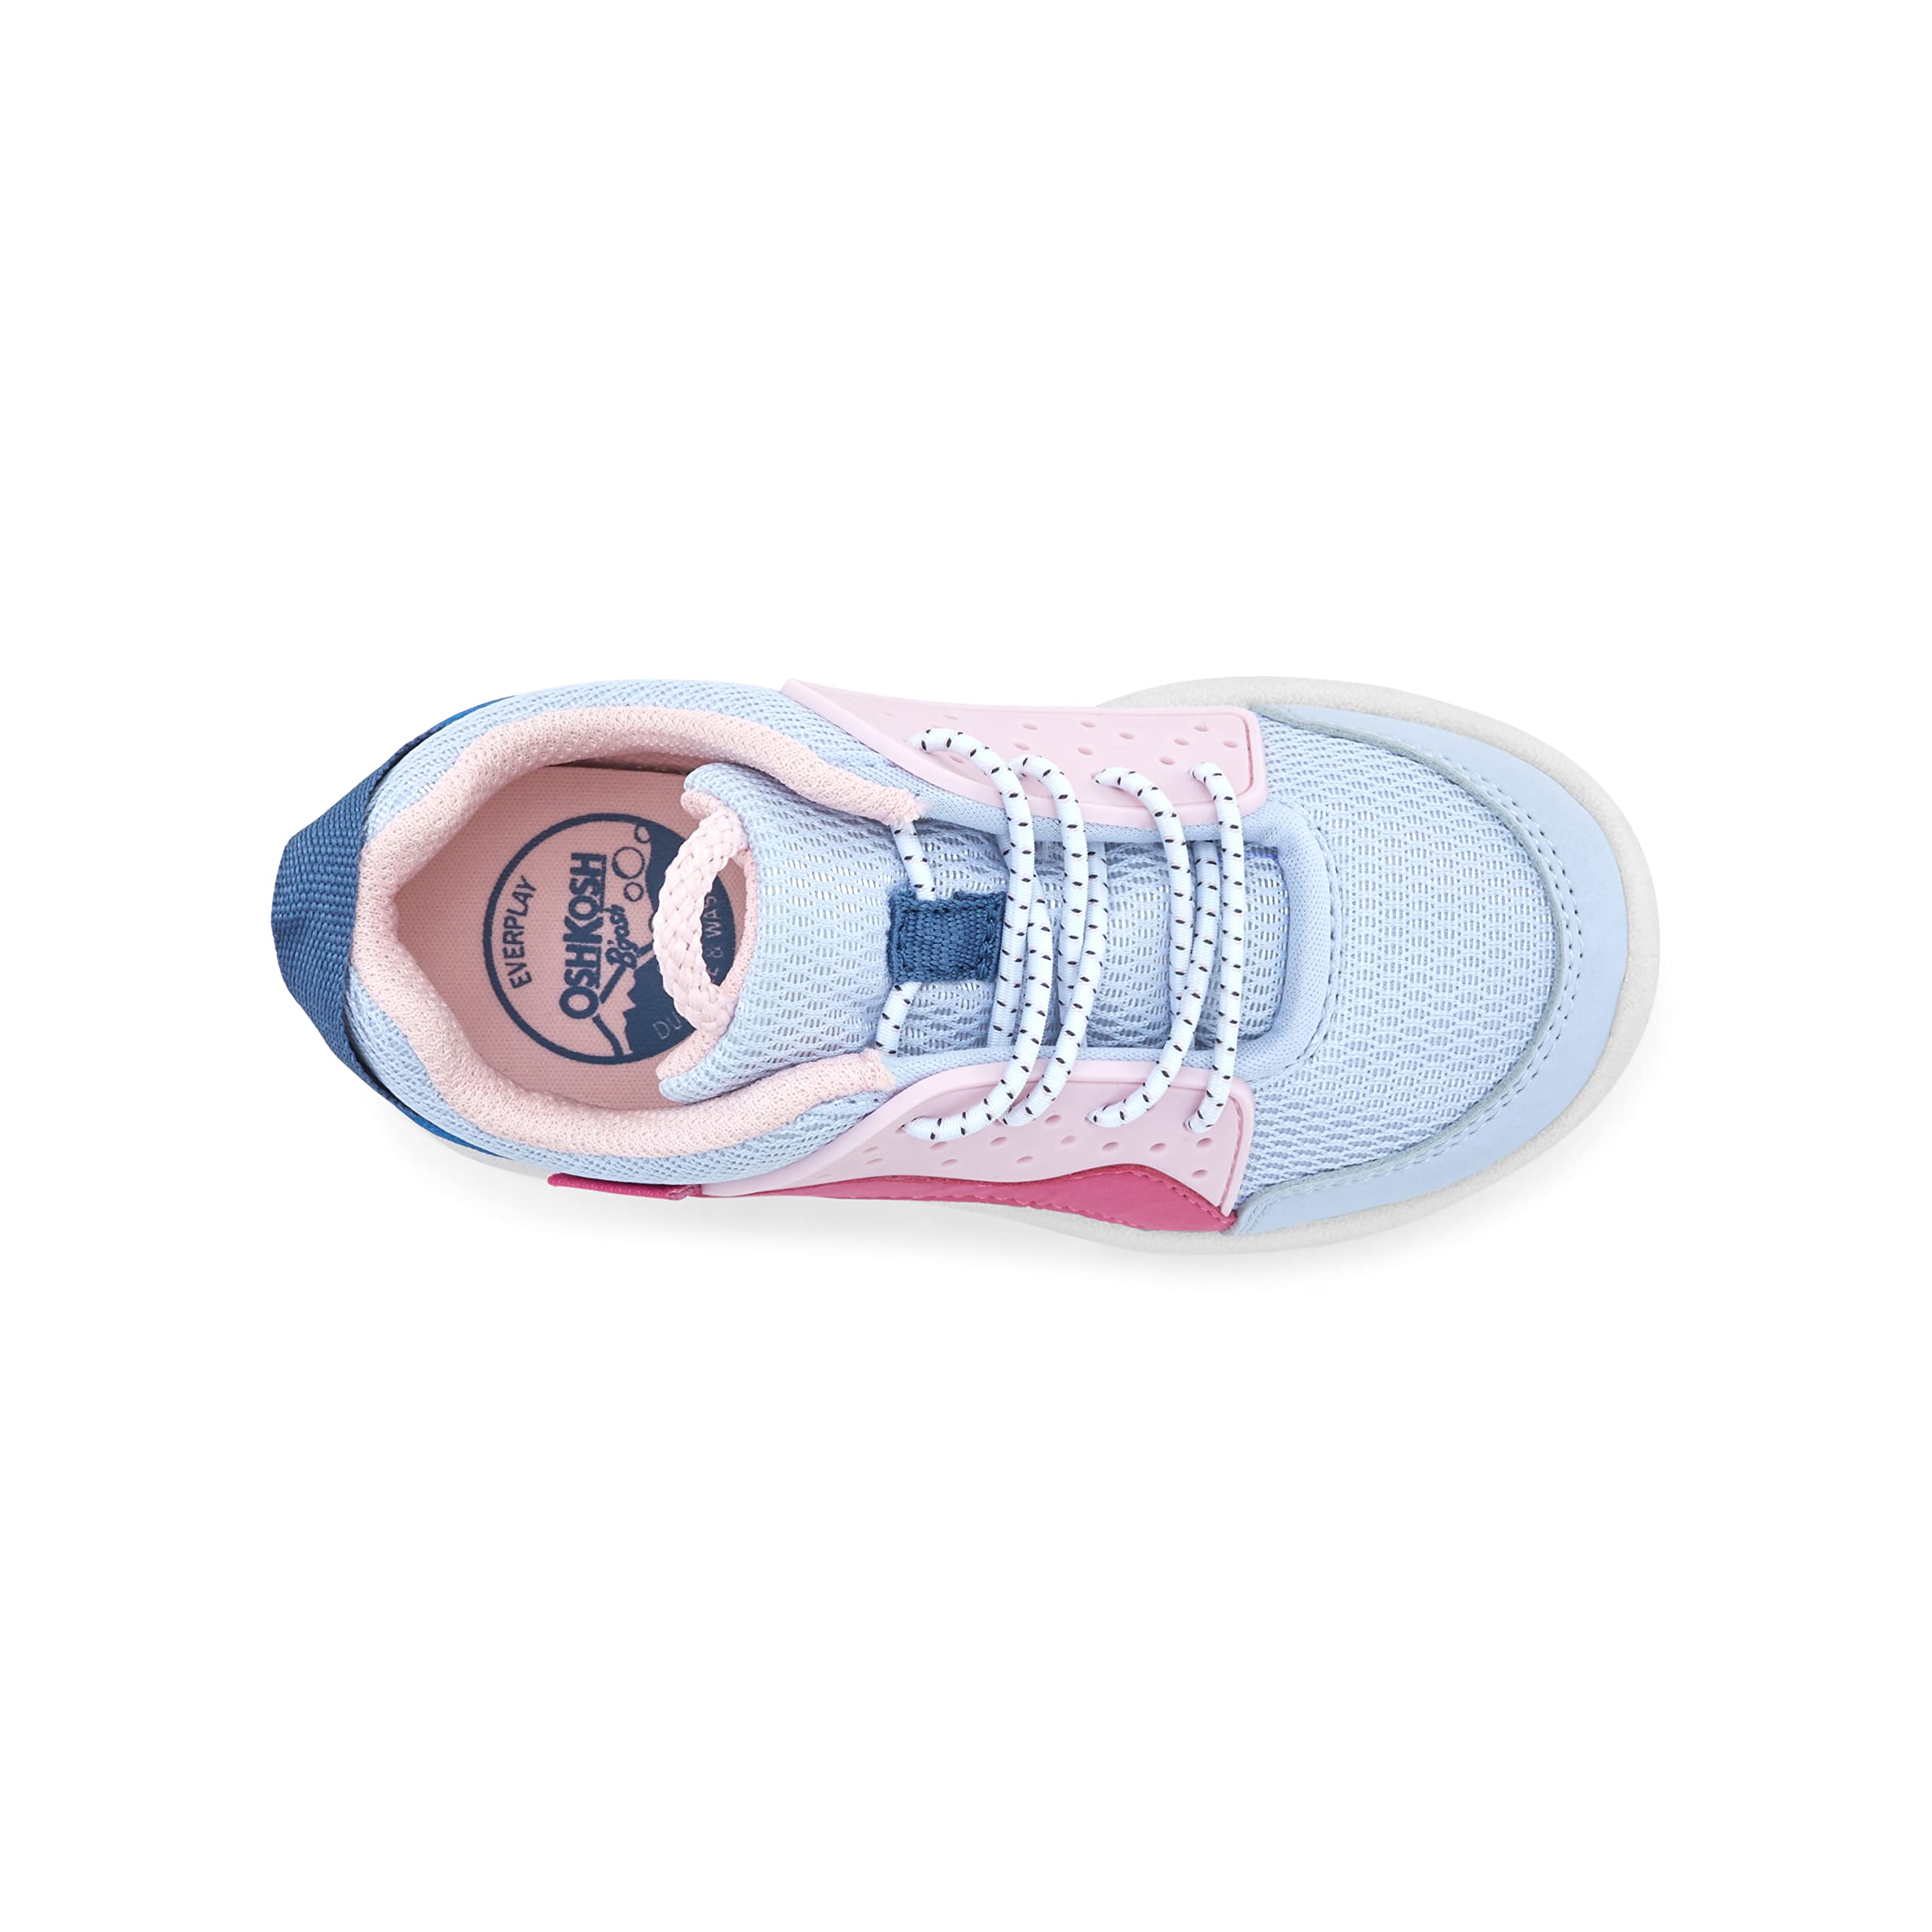 OshKosh B'Gosh Unisex-Child Junip Slip-On Sneaker